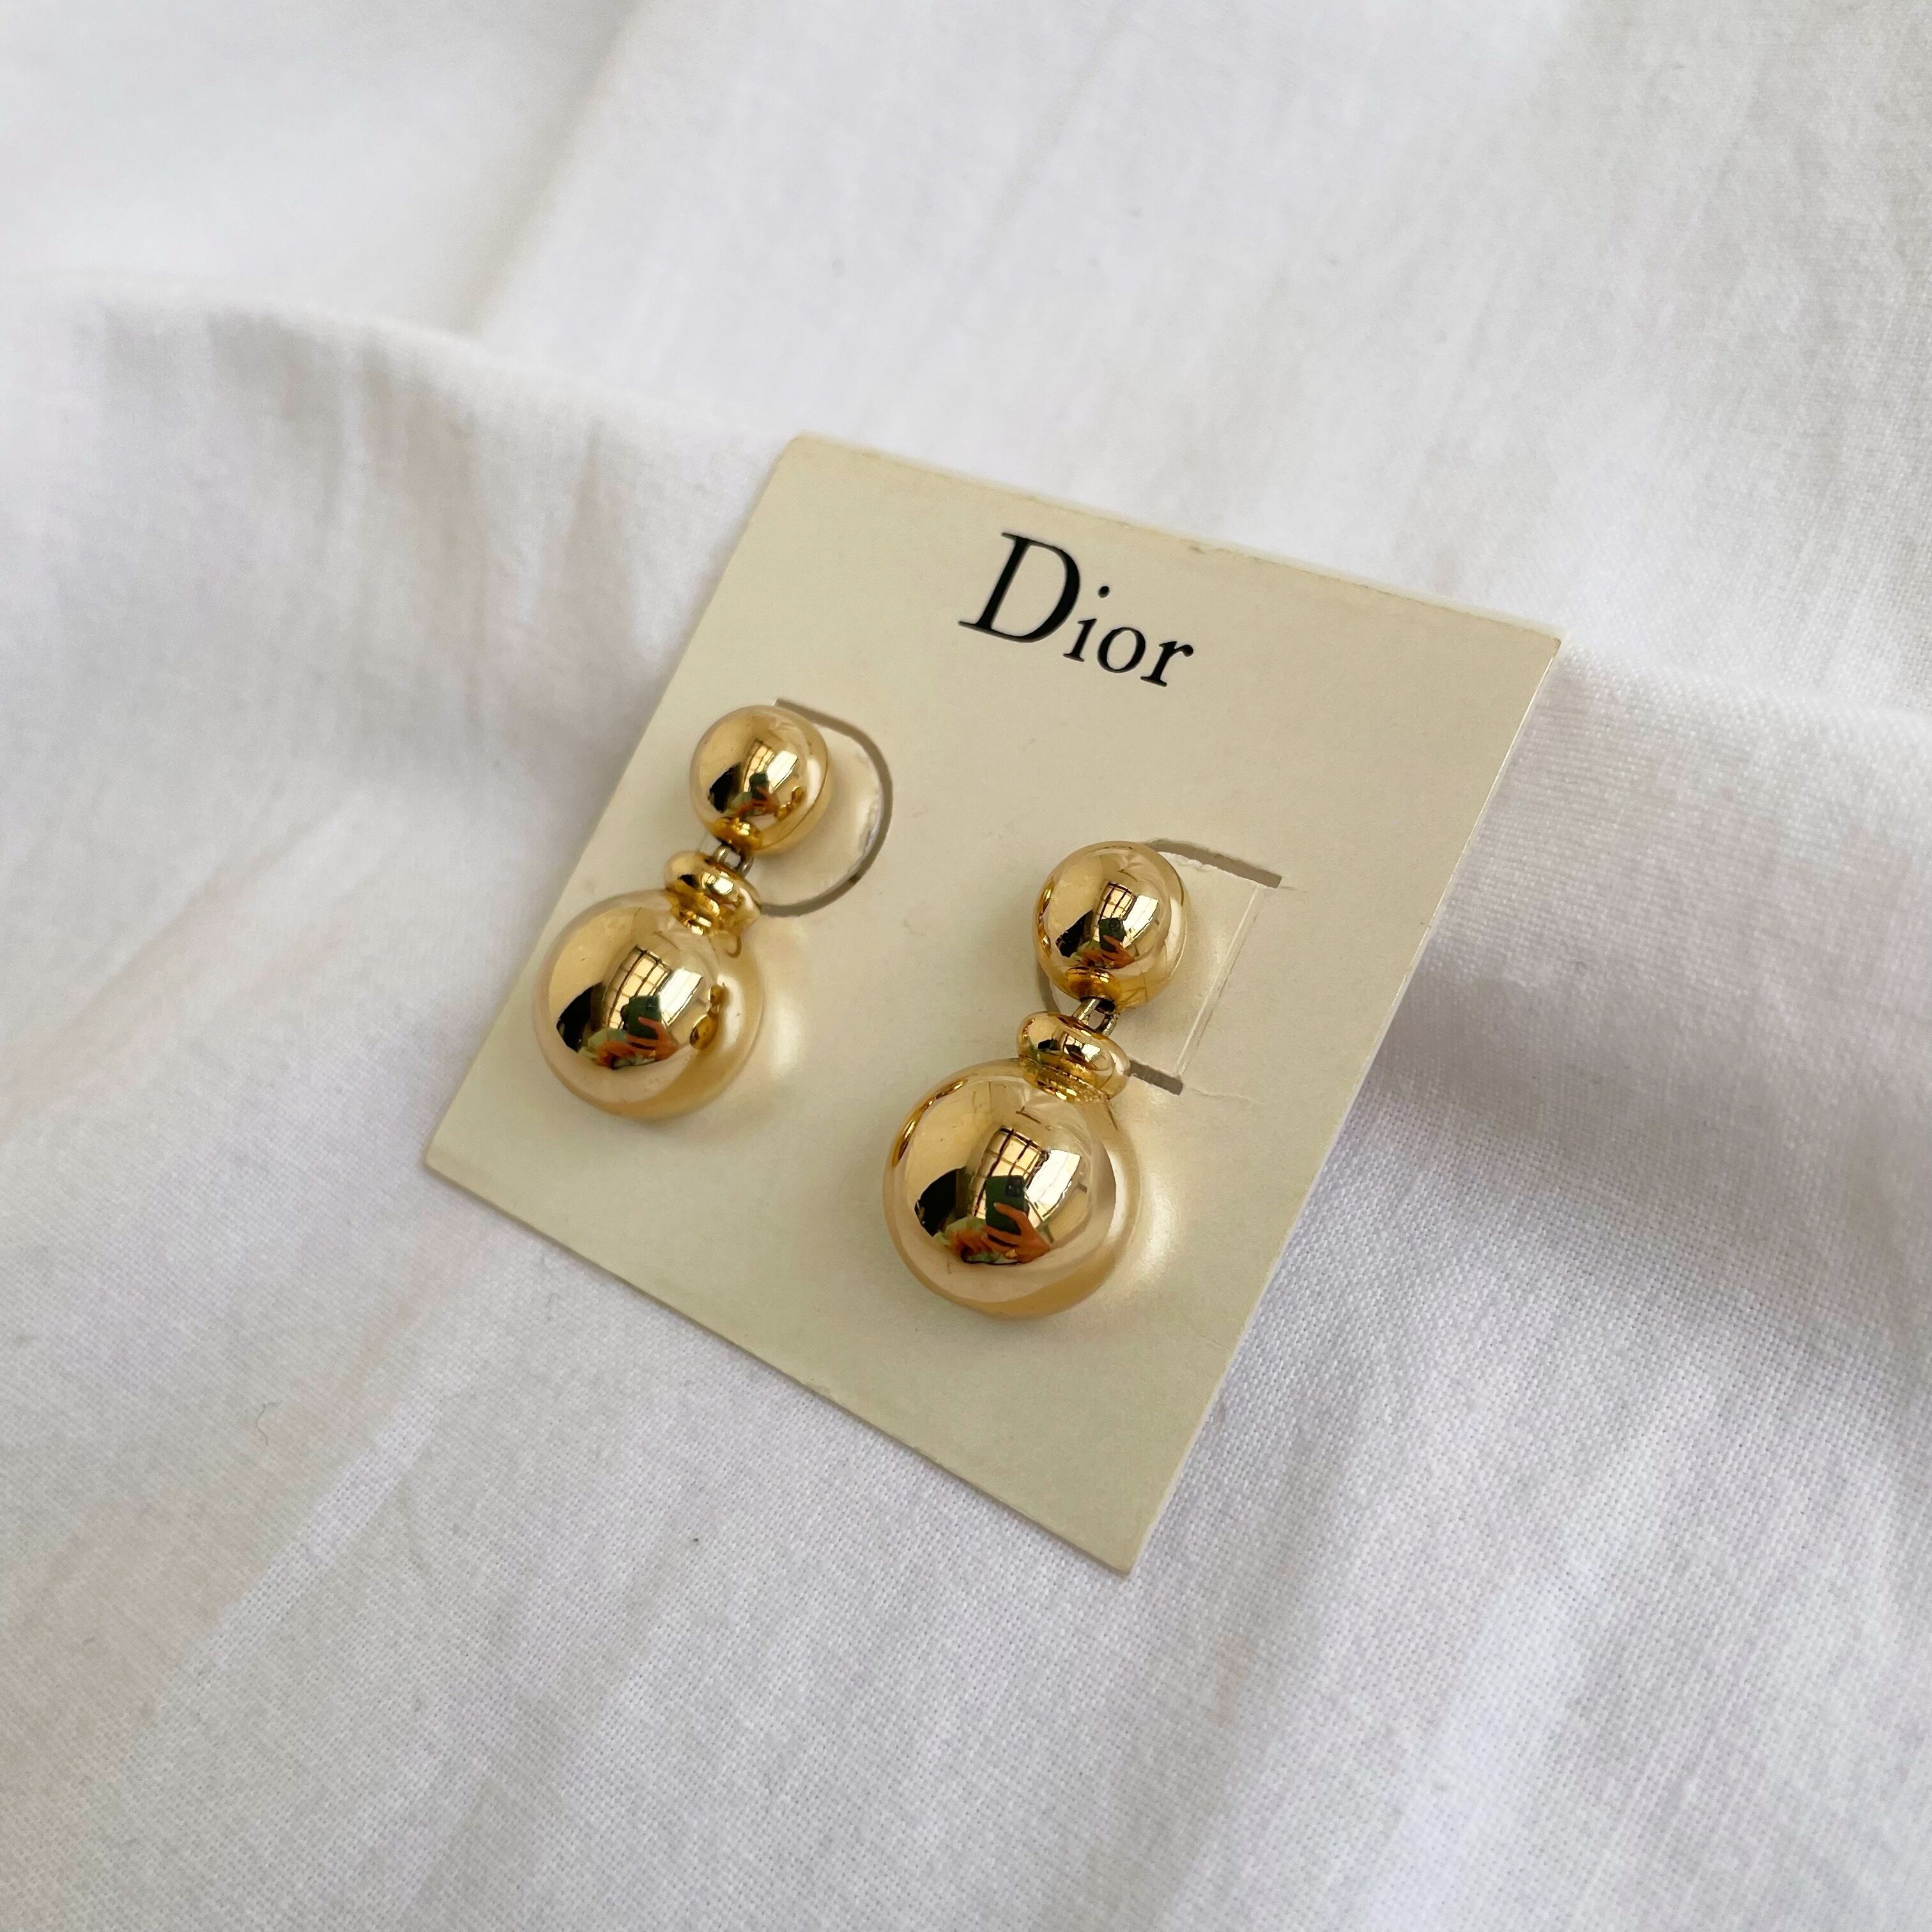 Dior pierce購入の際もよろしくお願いします